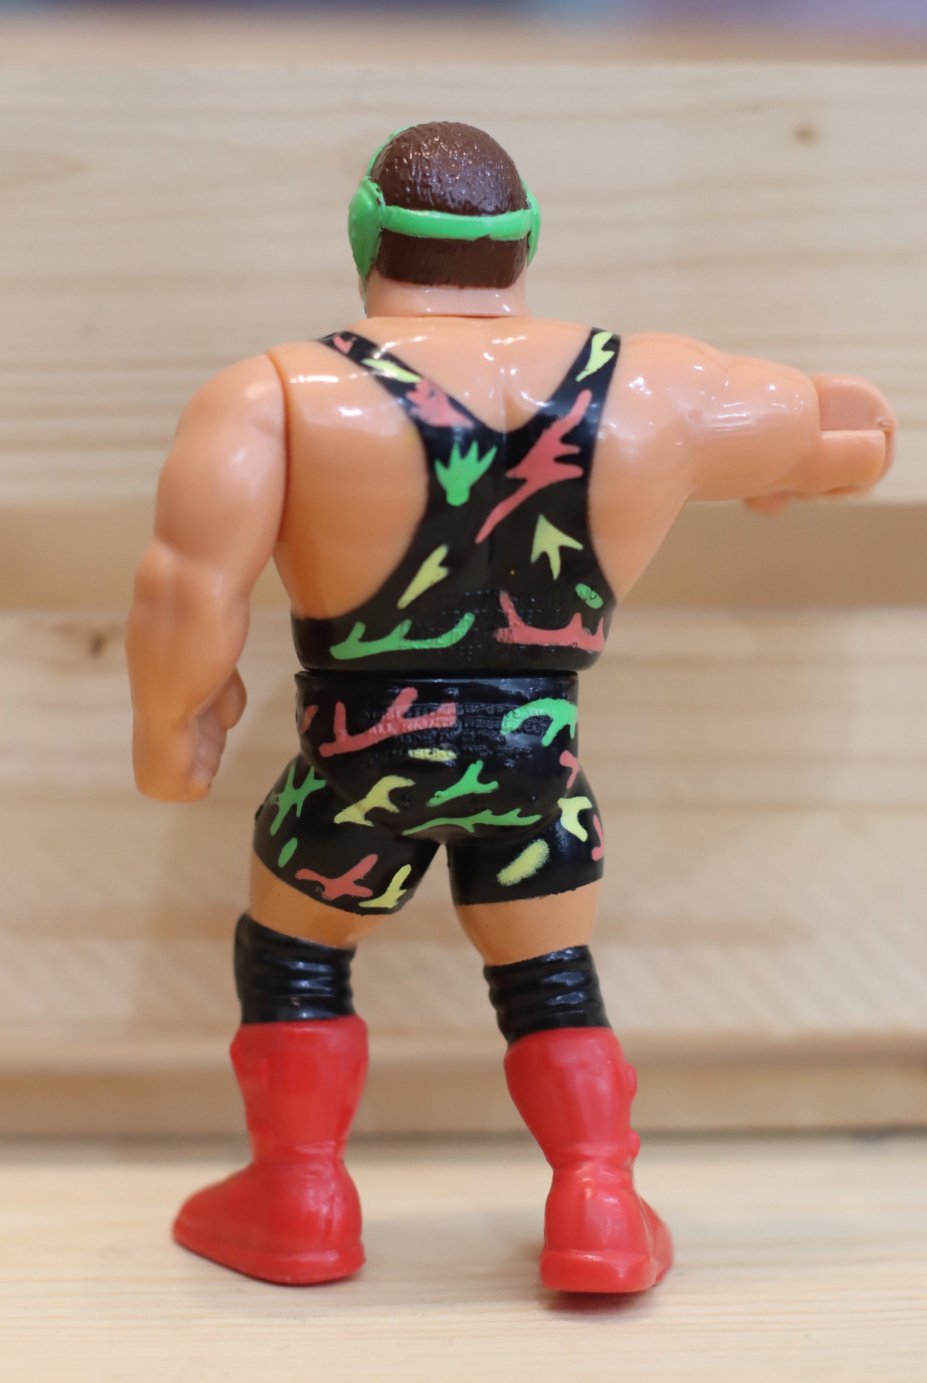 1992 Hasbro Rick Steiner Loose WWF Wrestling Figure Mint!